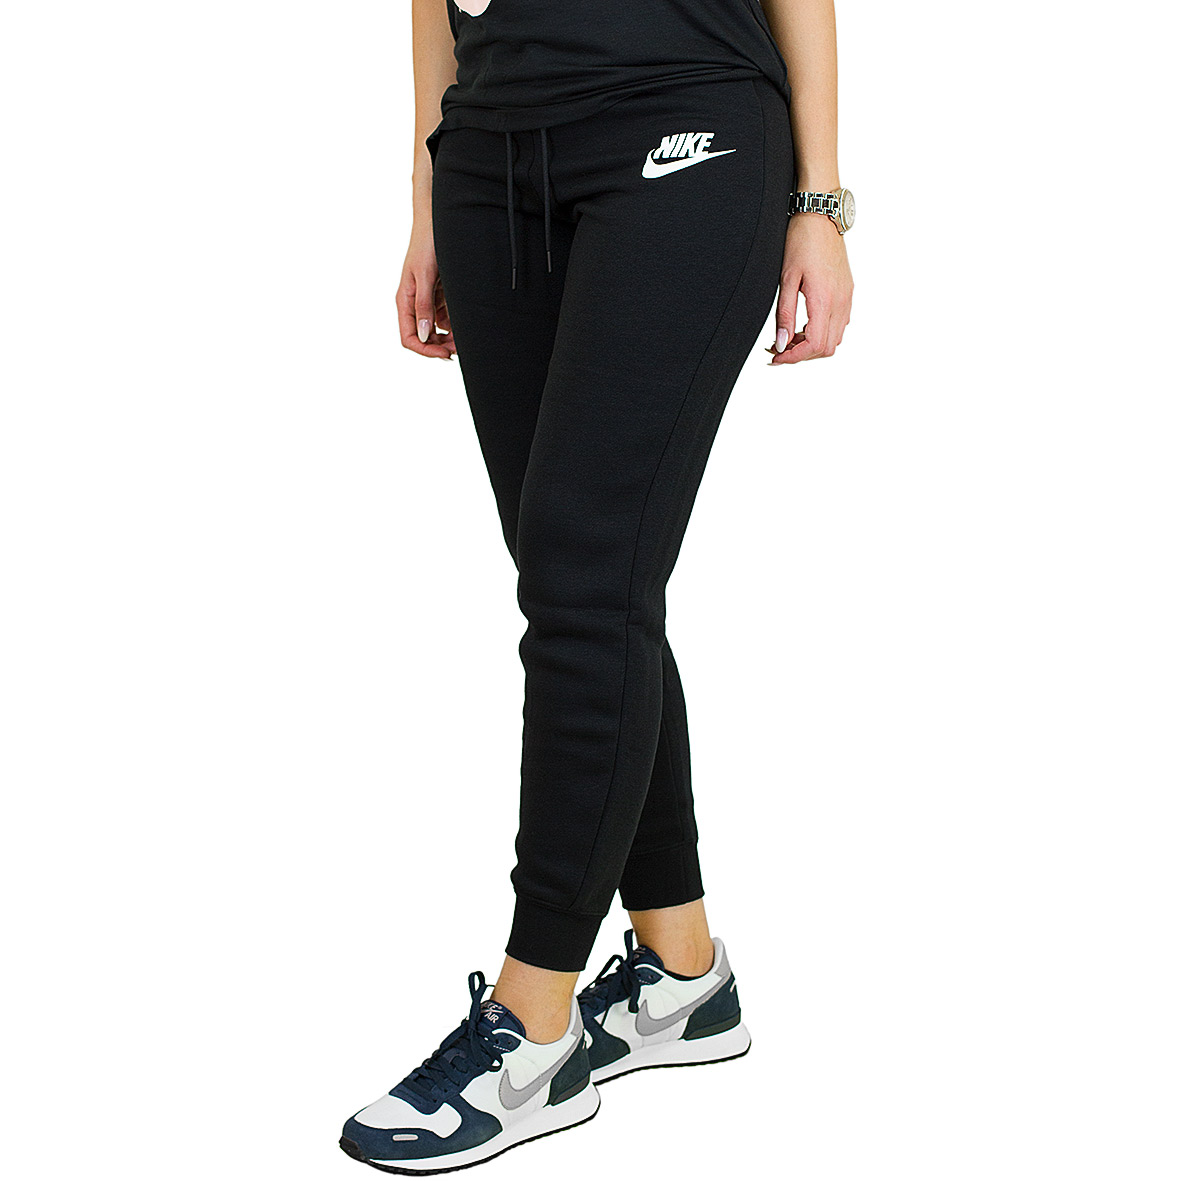 ☆ Nike Damen Sweatpants Rally schwarz/weiß - hier bestellen!